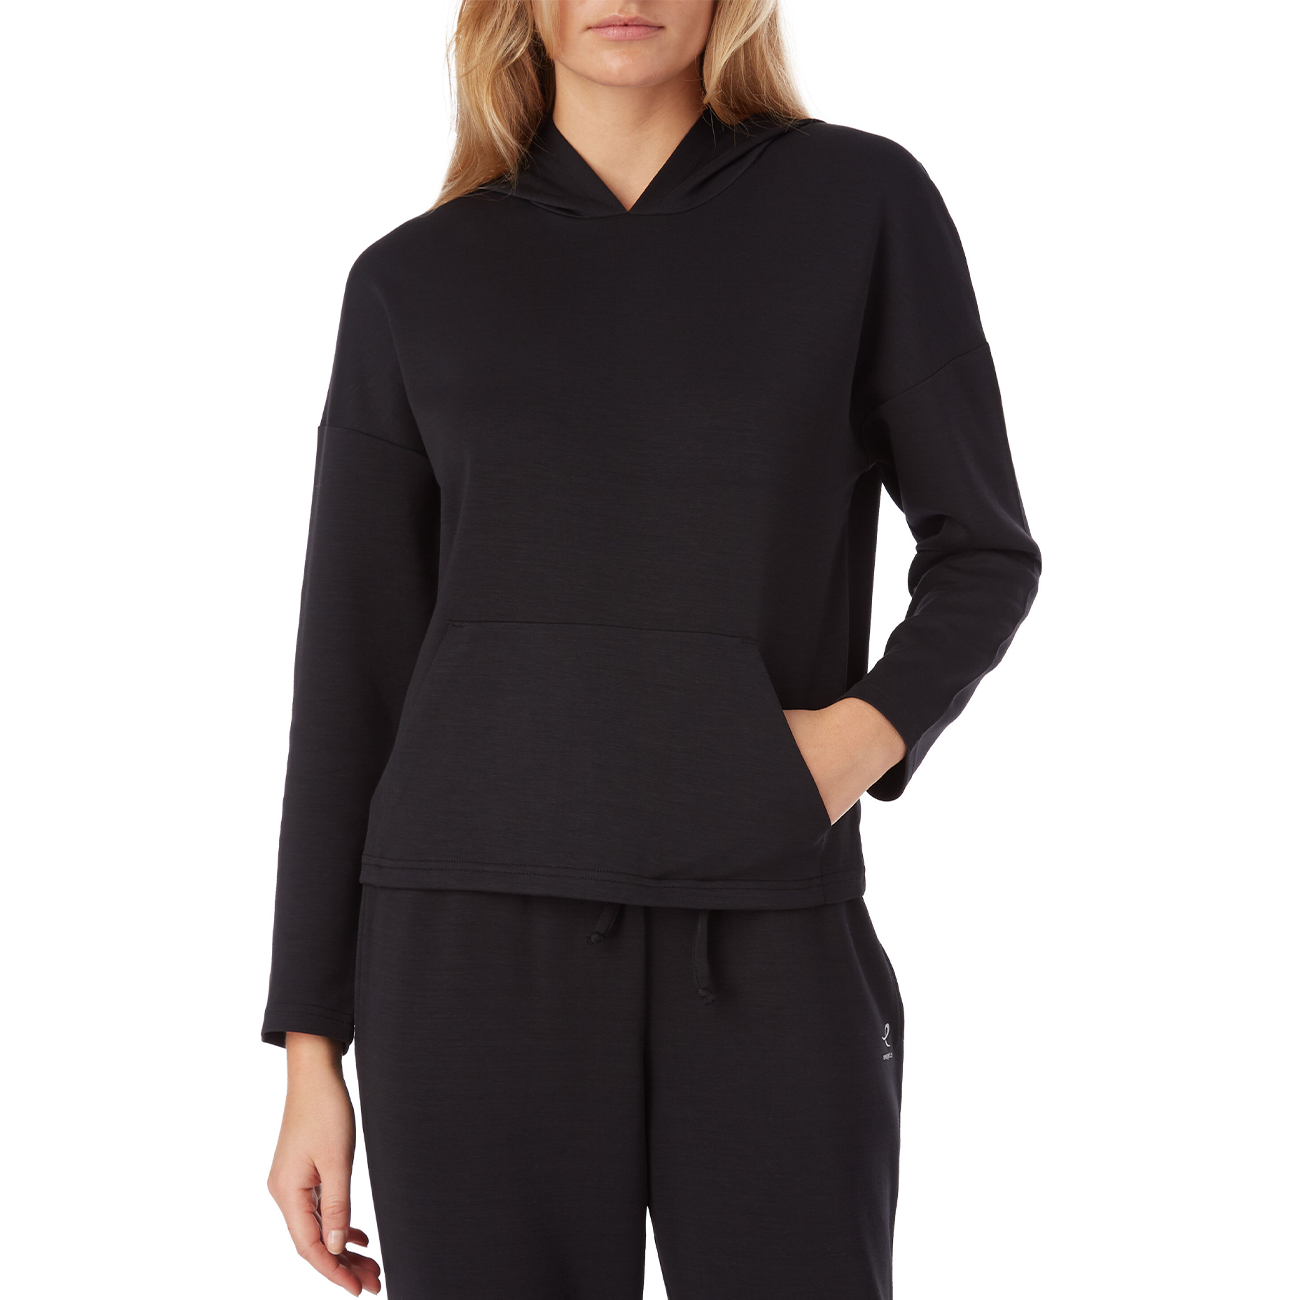 Energetics Oman Hooded Sweatshirt For Women, Dark Black